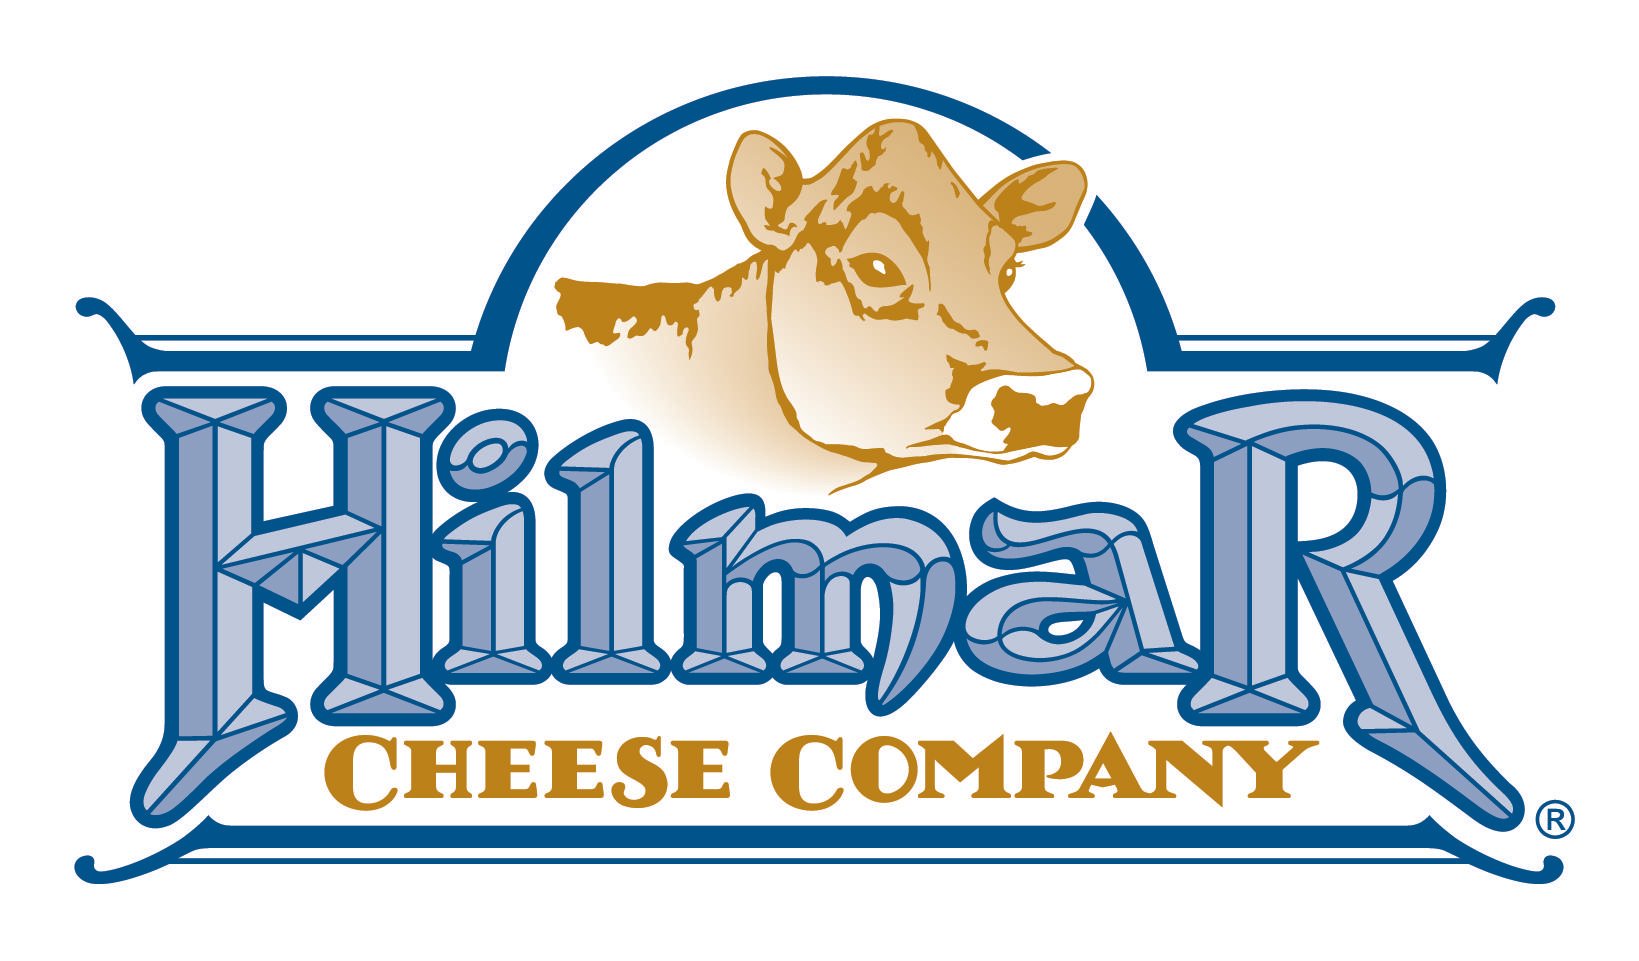 Cheese Company Logo - Home Cheese Company, Inc